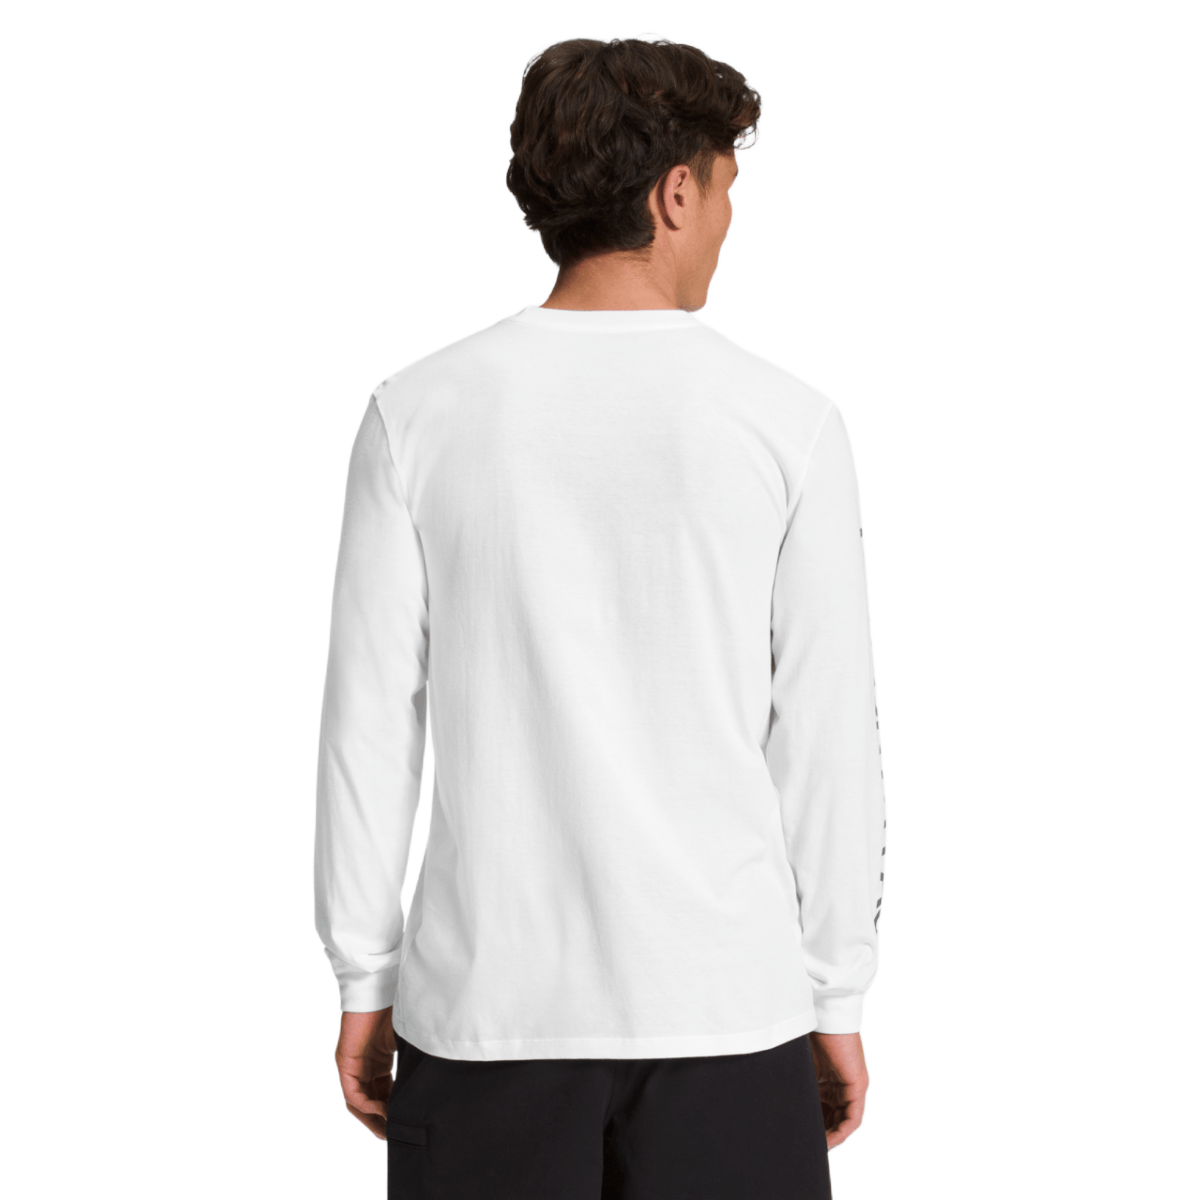 The North Face Long-Sleeve Hit Graphic Tee Shirt - Men's - Bobwards.com